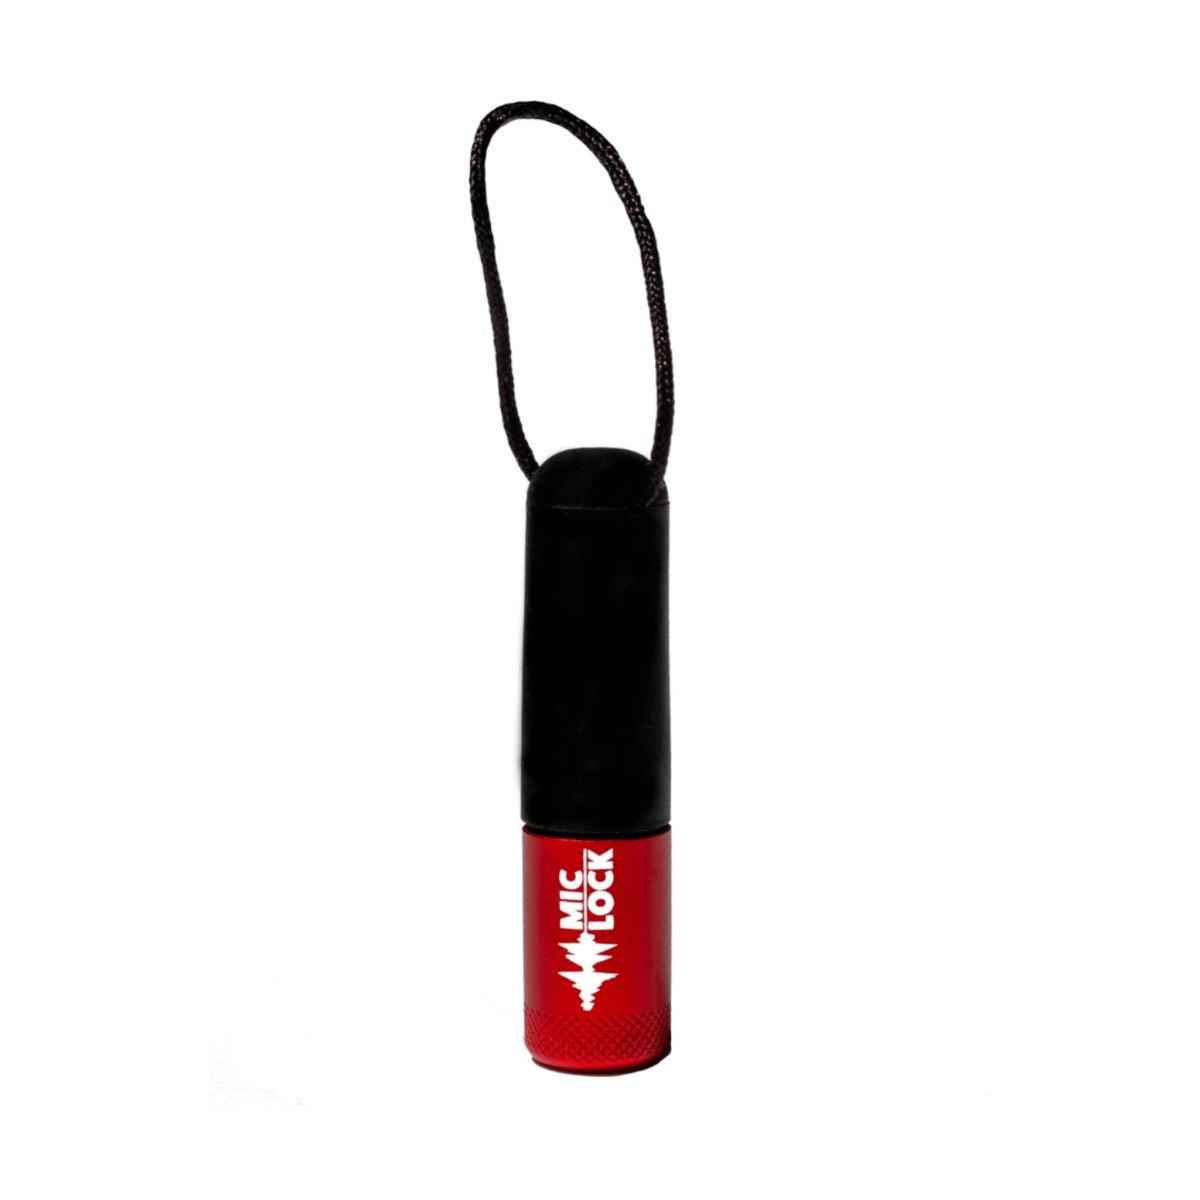 Mic-Lock 3.5mm Single-Ended Microphone Blocker - Metallic Red - Mic-Lock